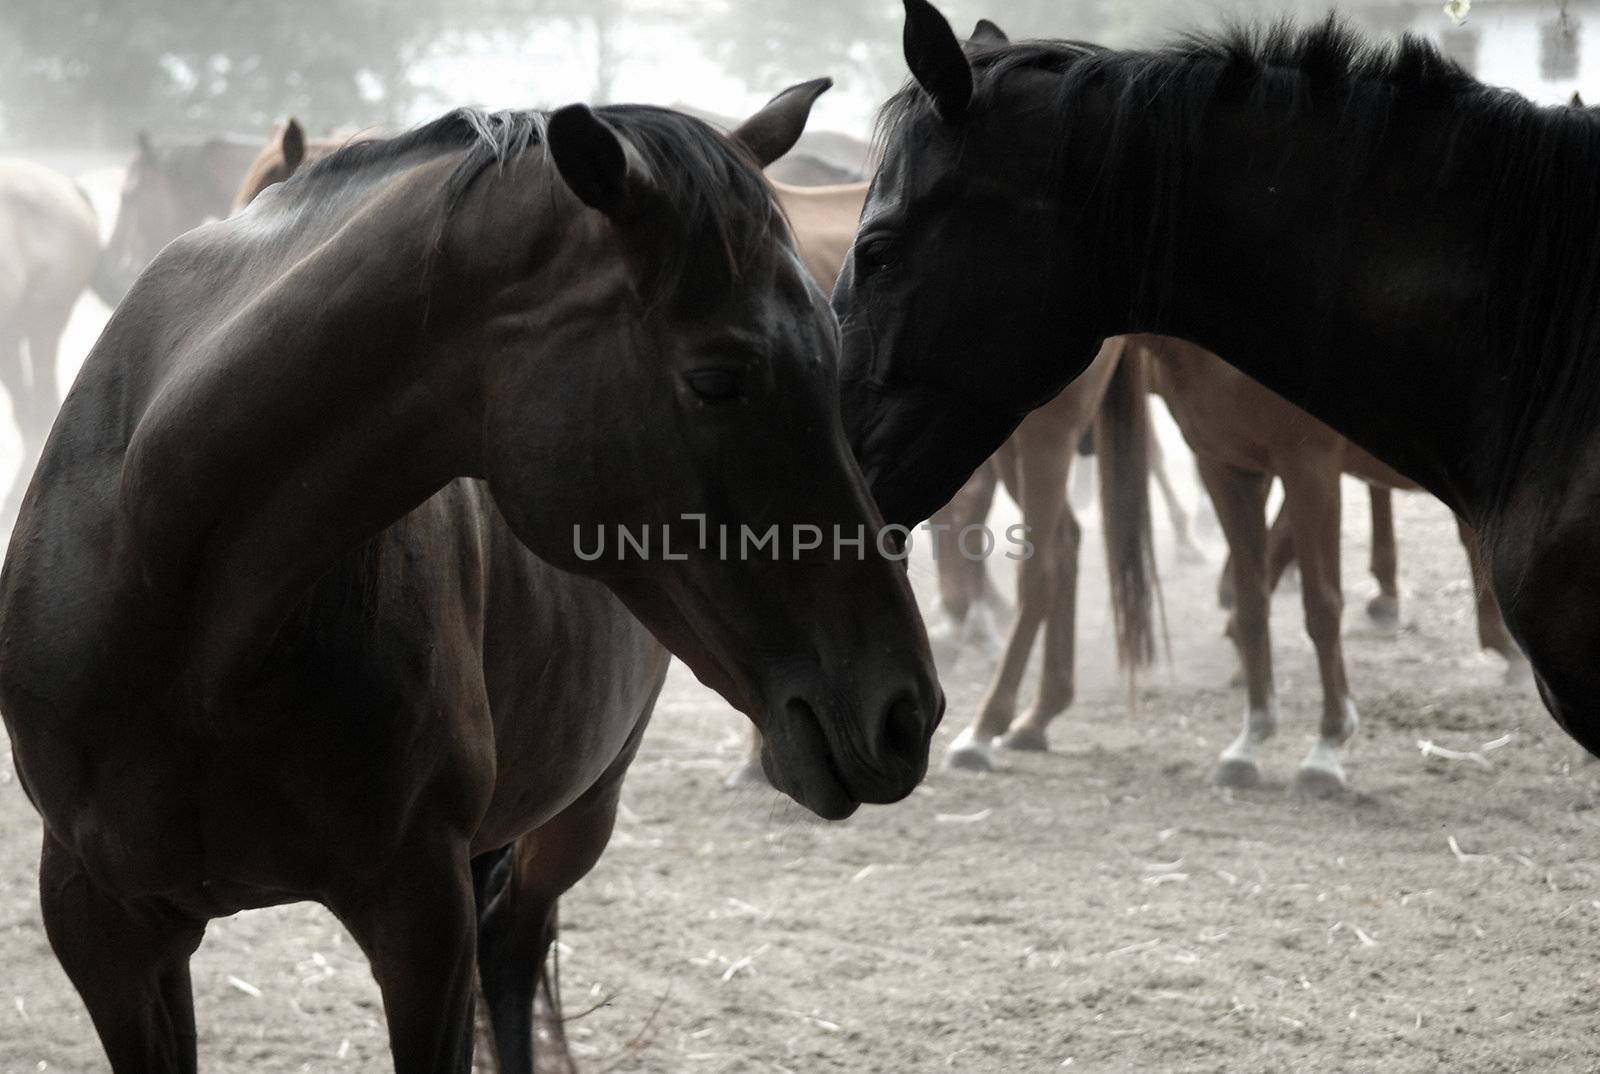 Horse Herd in the countryside of Ukraine